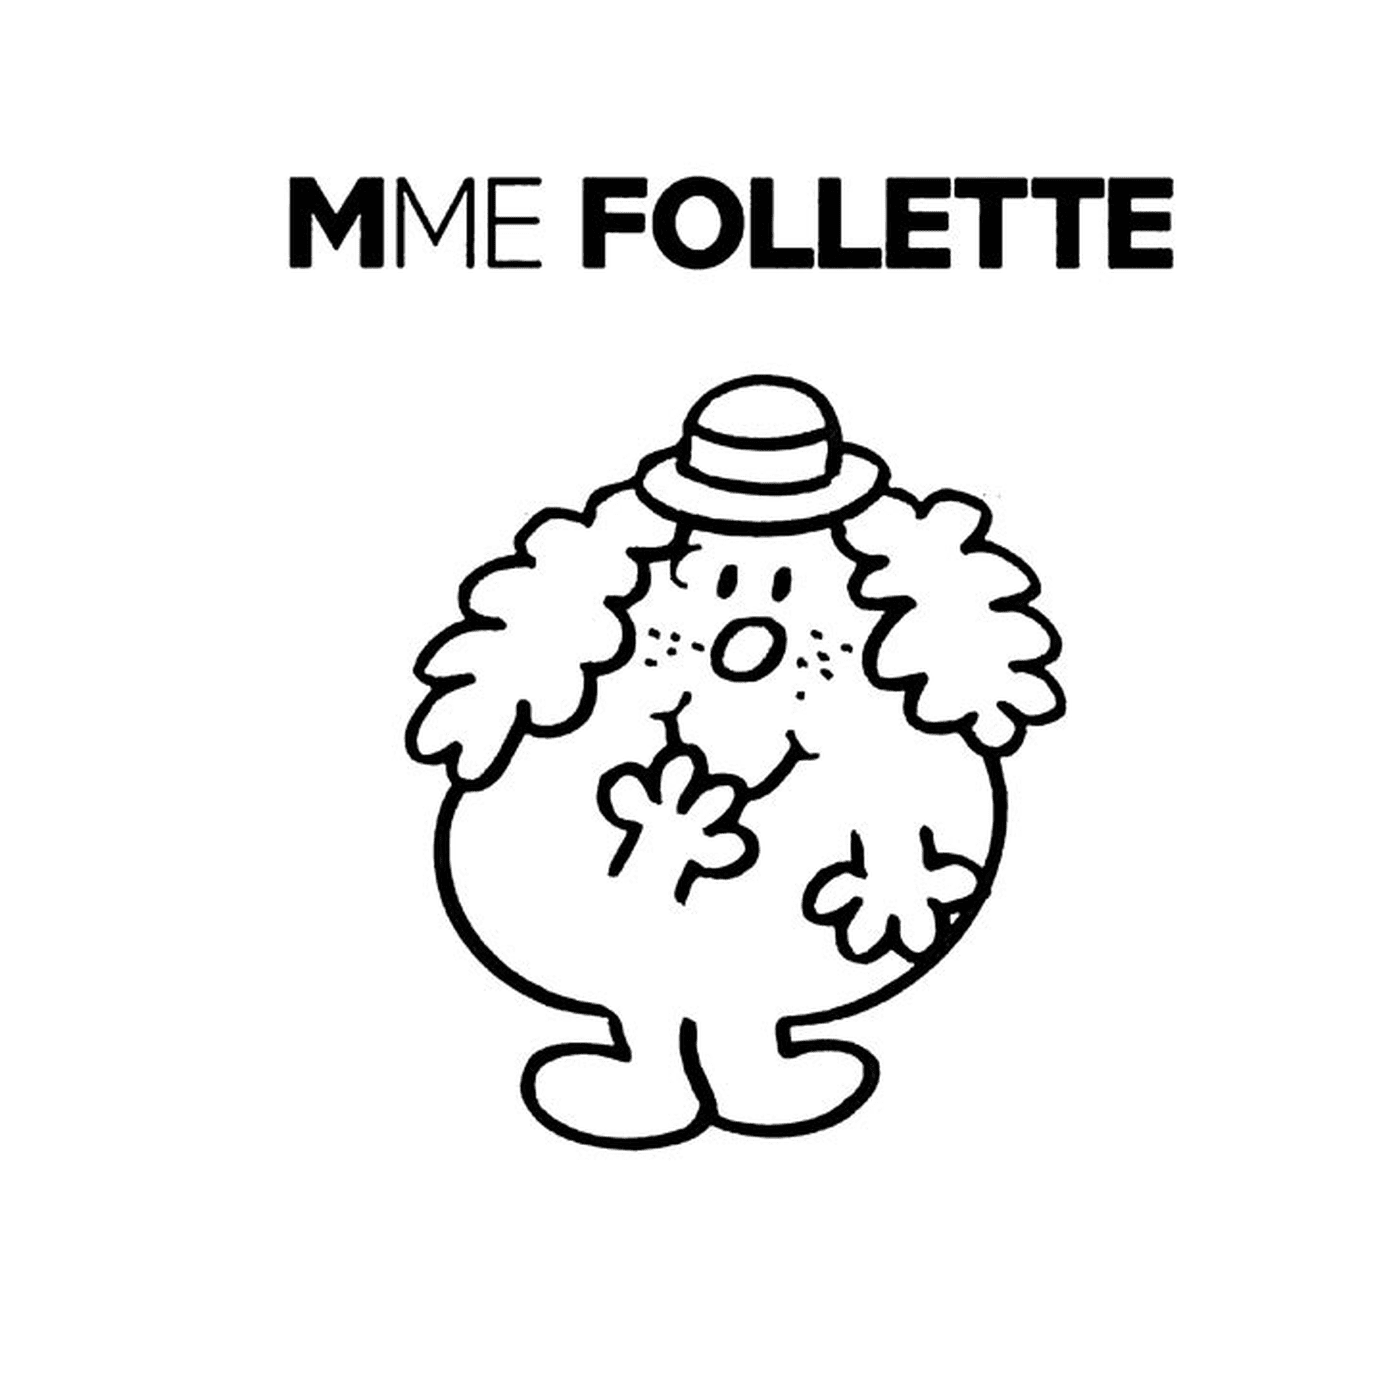   Monsieur Madame Madame Follette 